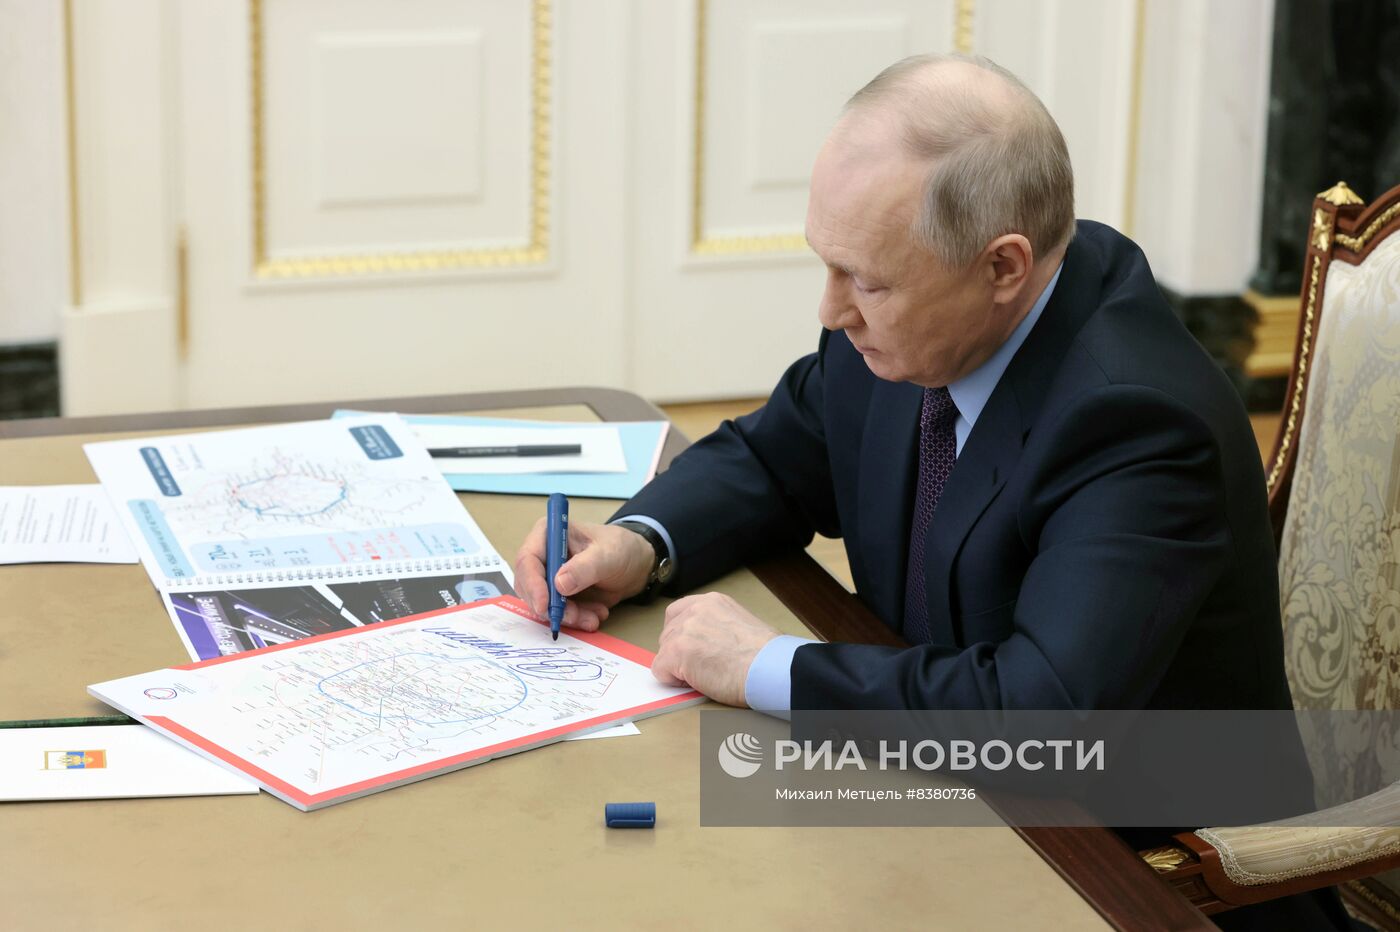 Президент РФ В. Путин принял участие в открытии БКЛ